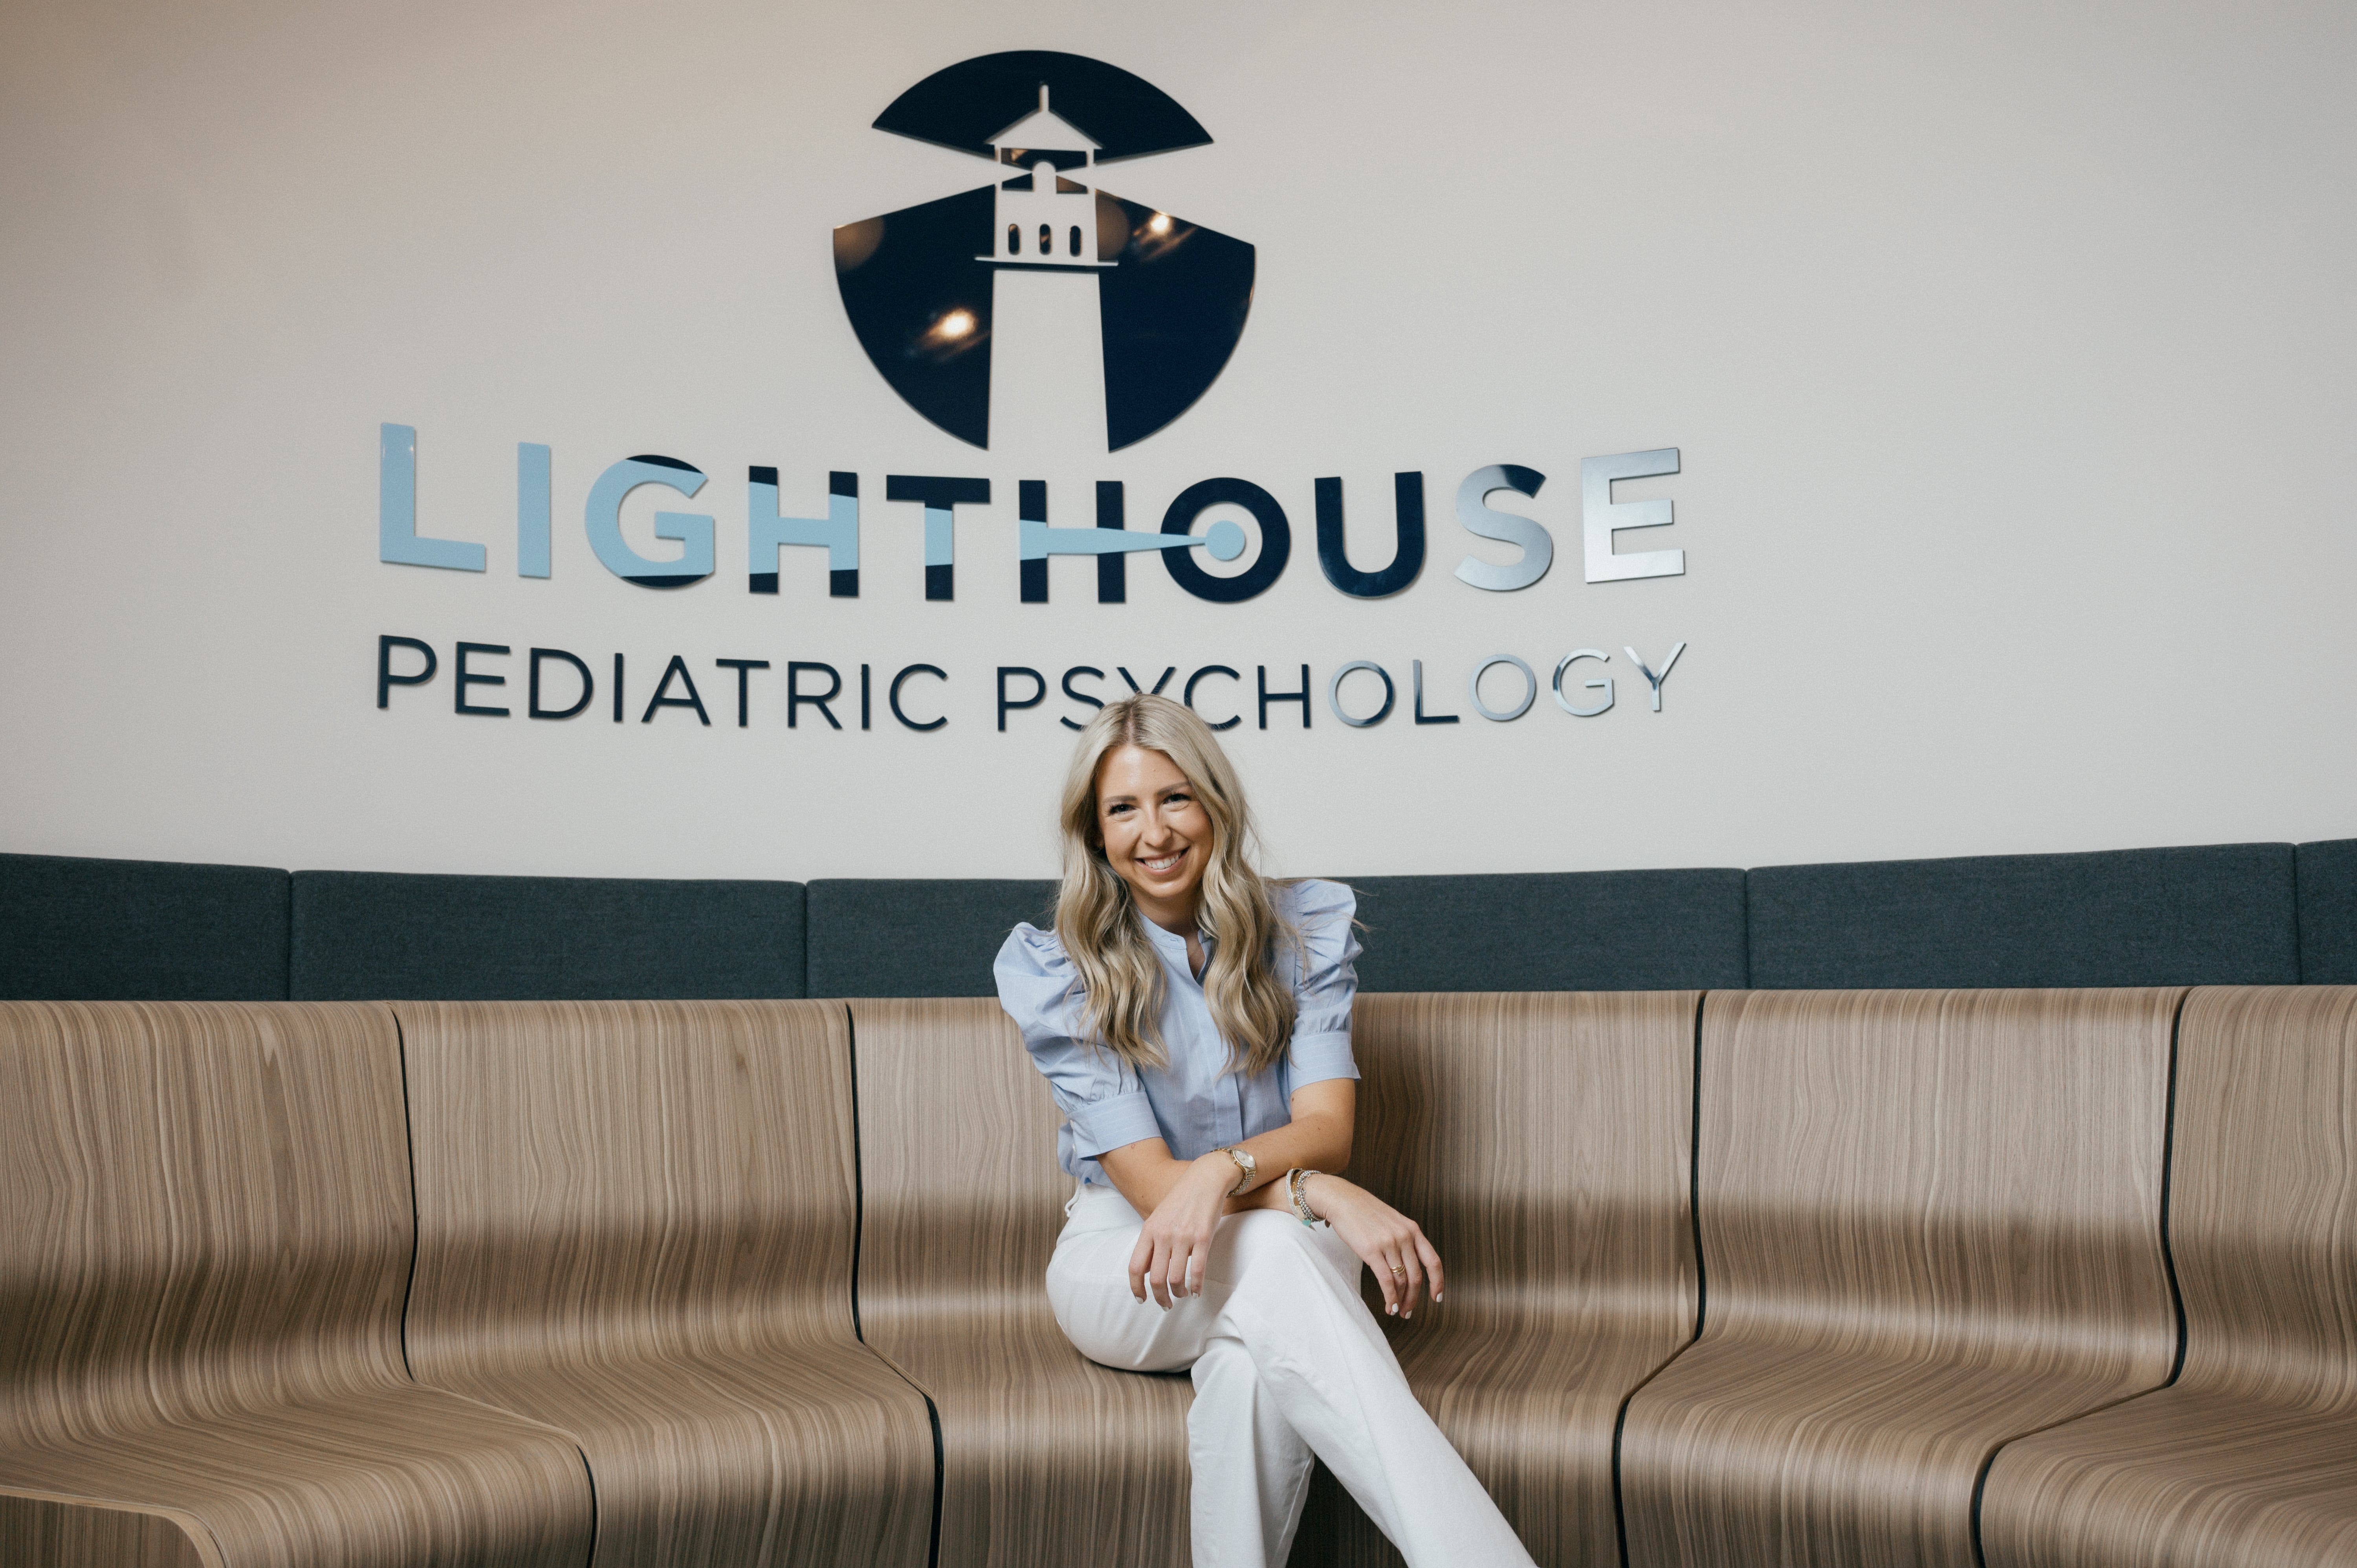 Lighthouse Pediatric Psychology - Chicago, IL 60654 - (312)291-9197 | ShowMeLocal.com